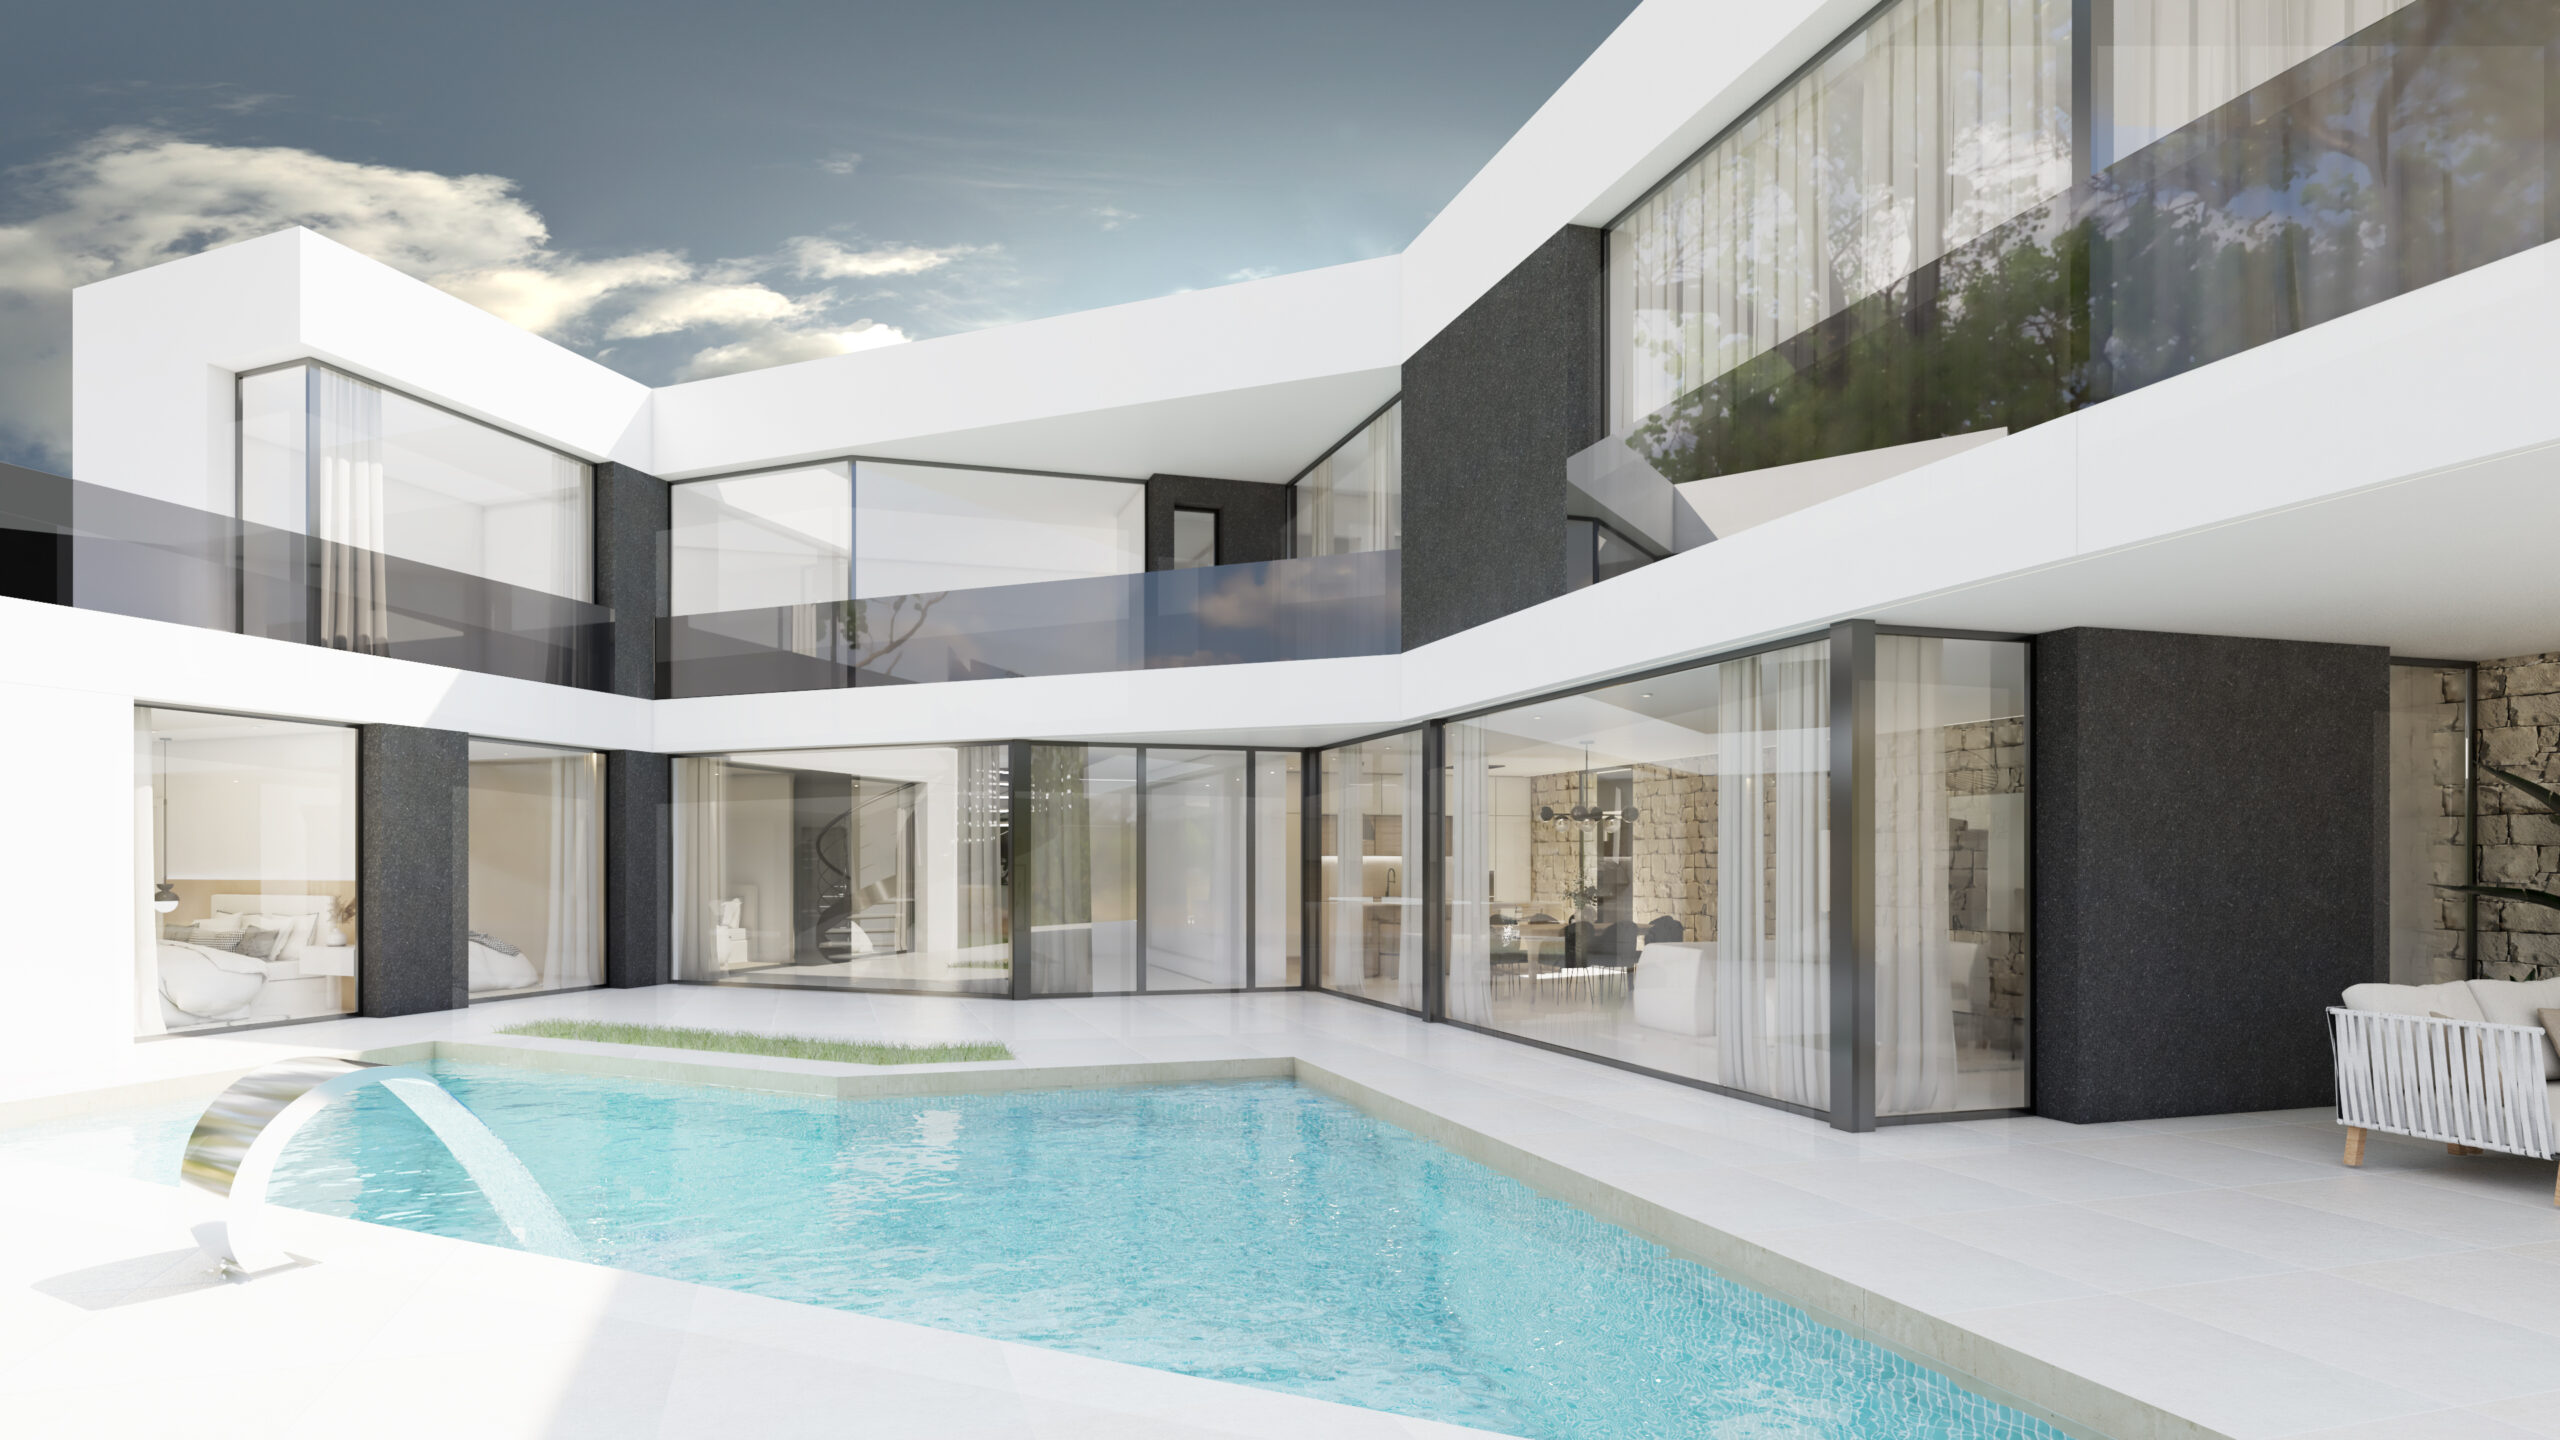 San Pedro – Design Your Dream Home